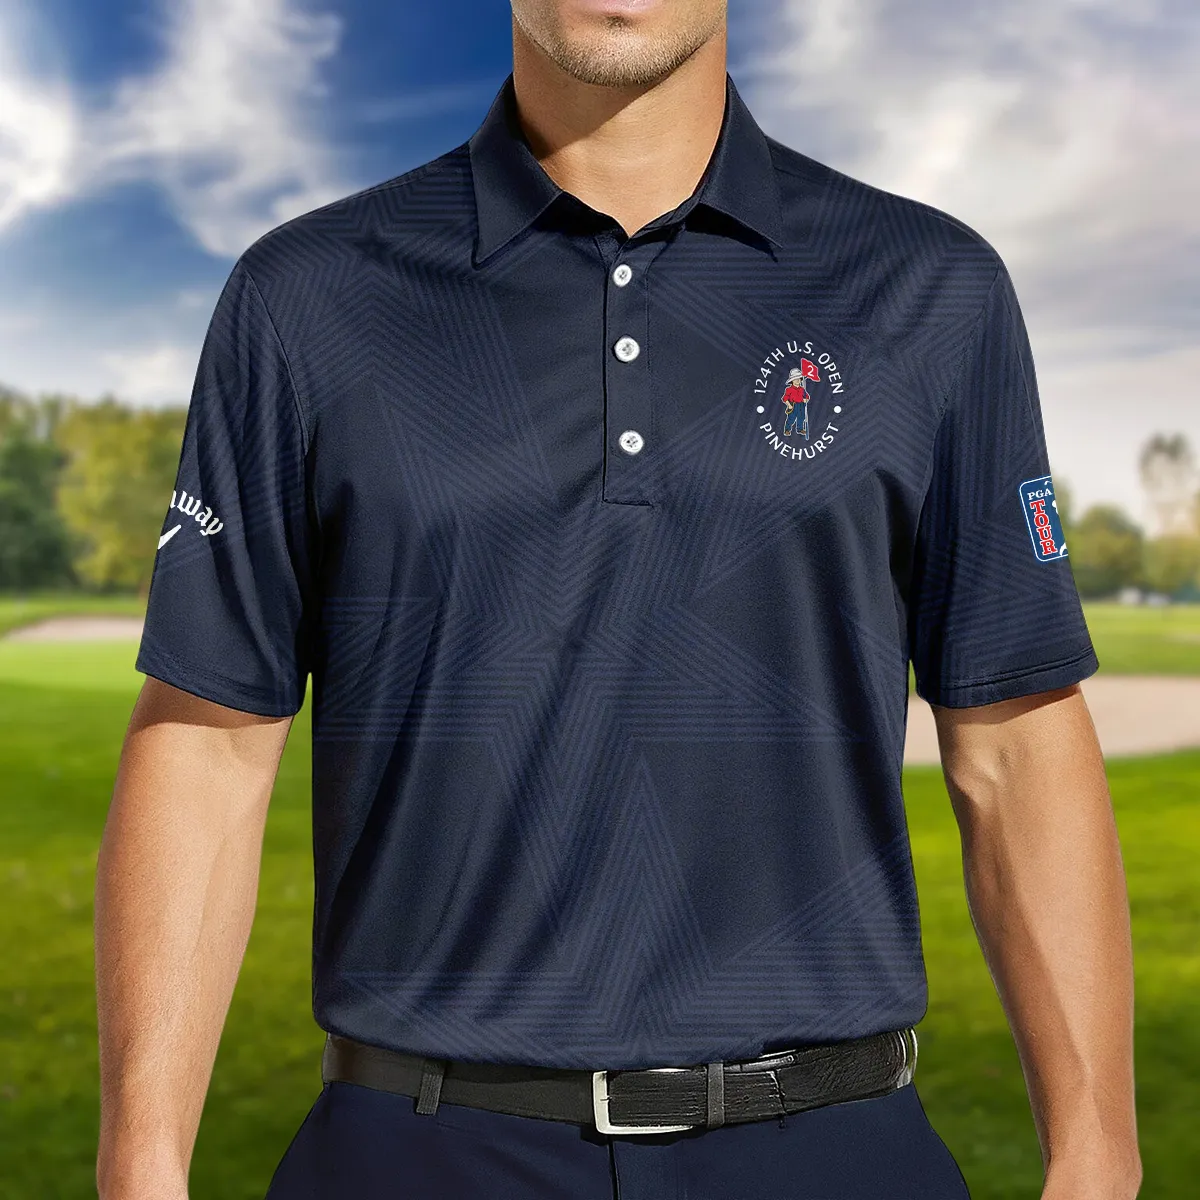 Golf Navy Color Star Pattern 124th U.S. Open Pinehurst Callaway Polo Shirt Style Classic PLK1400